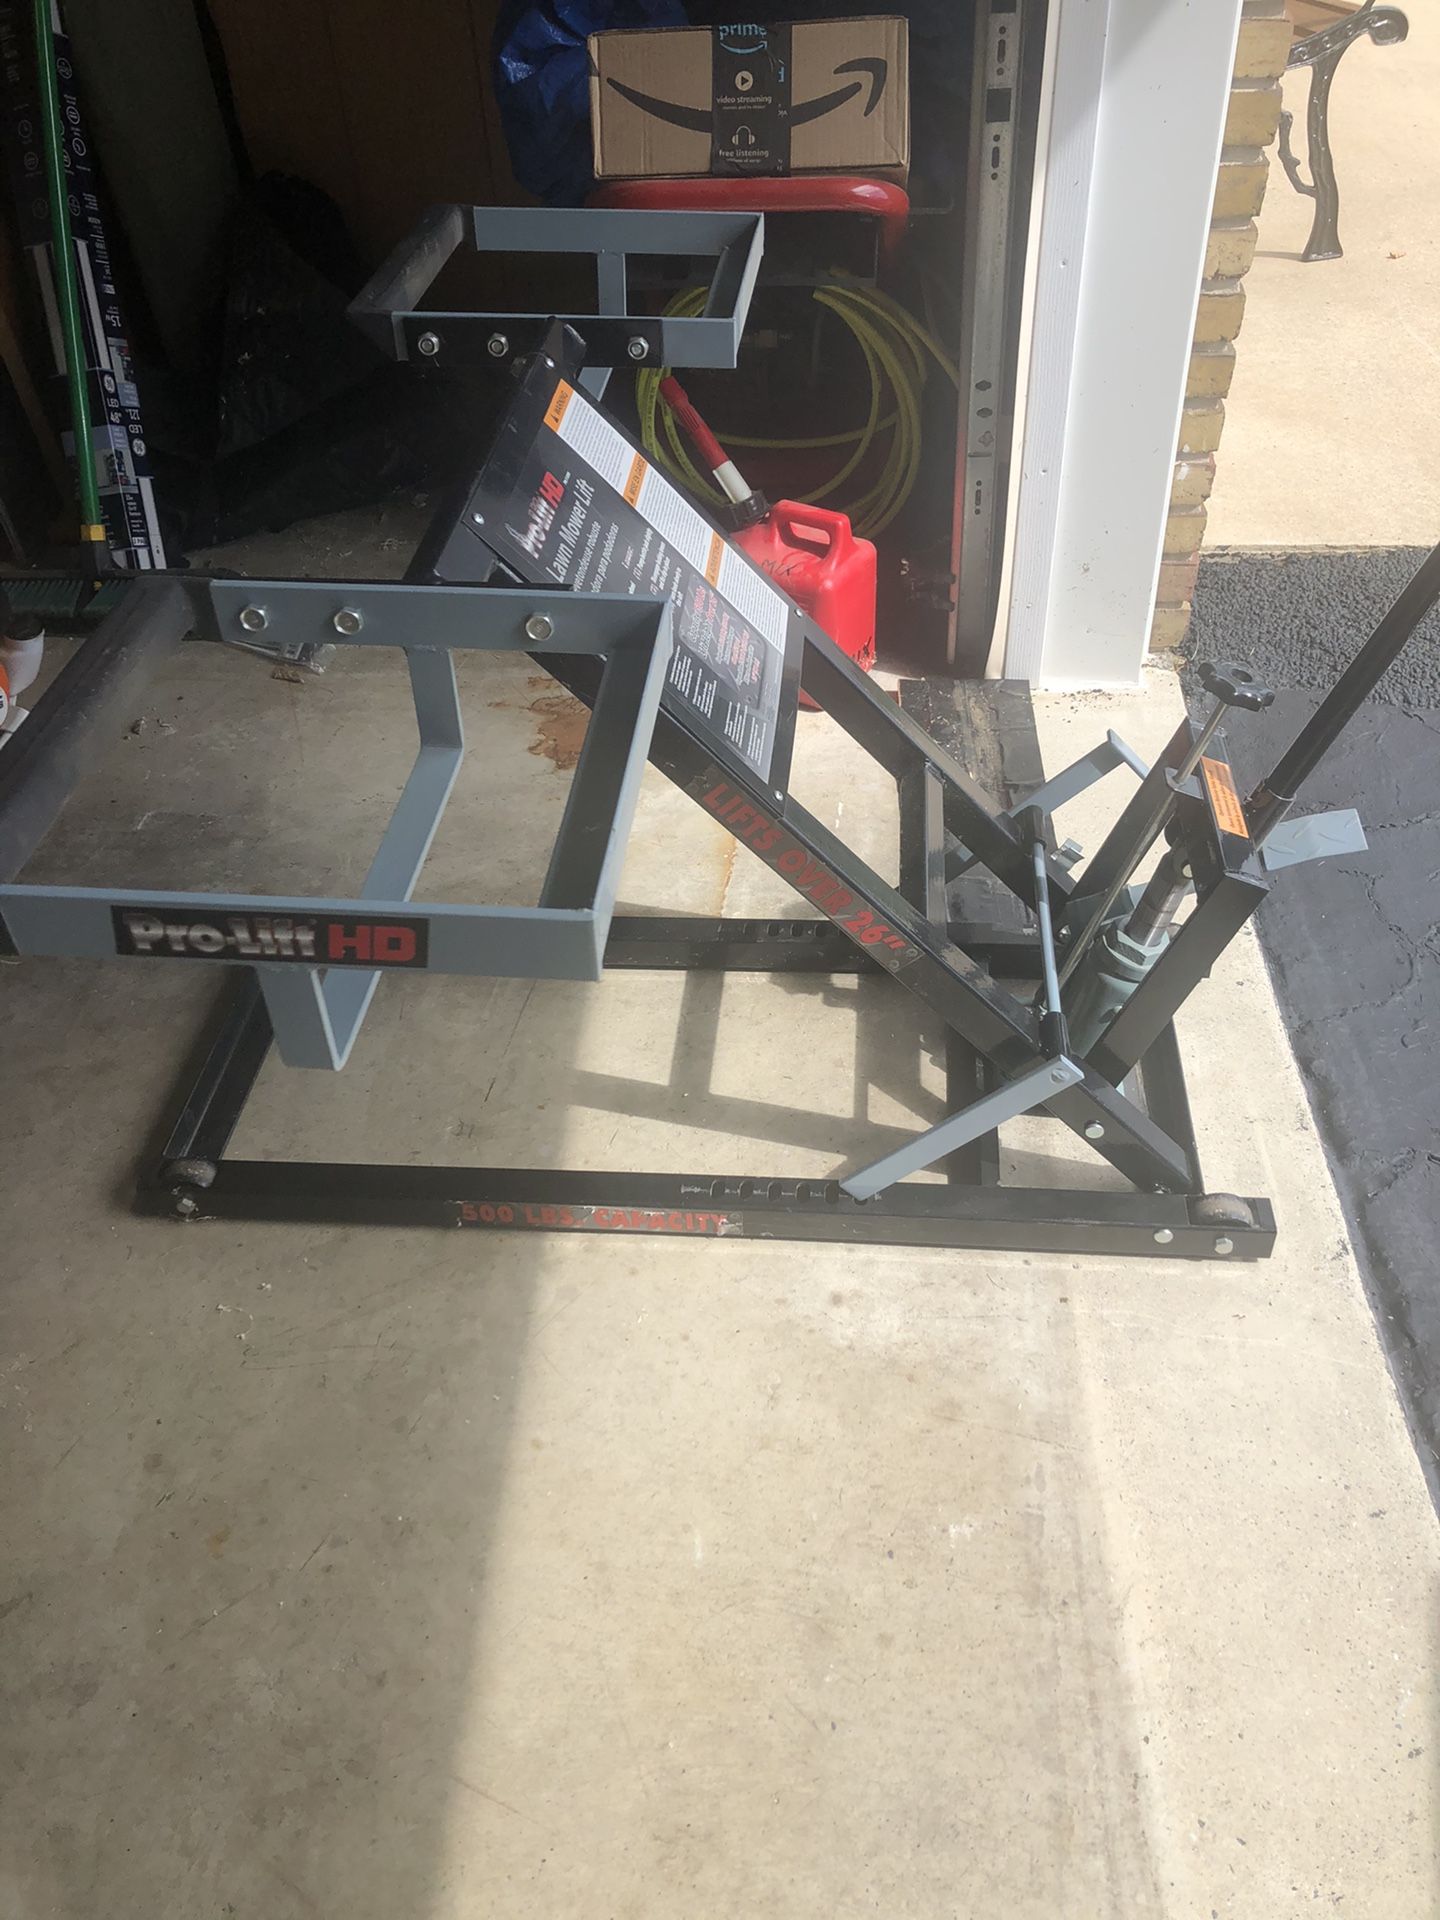 Pro Lift HD Lawn mower lift